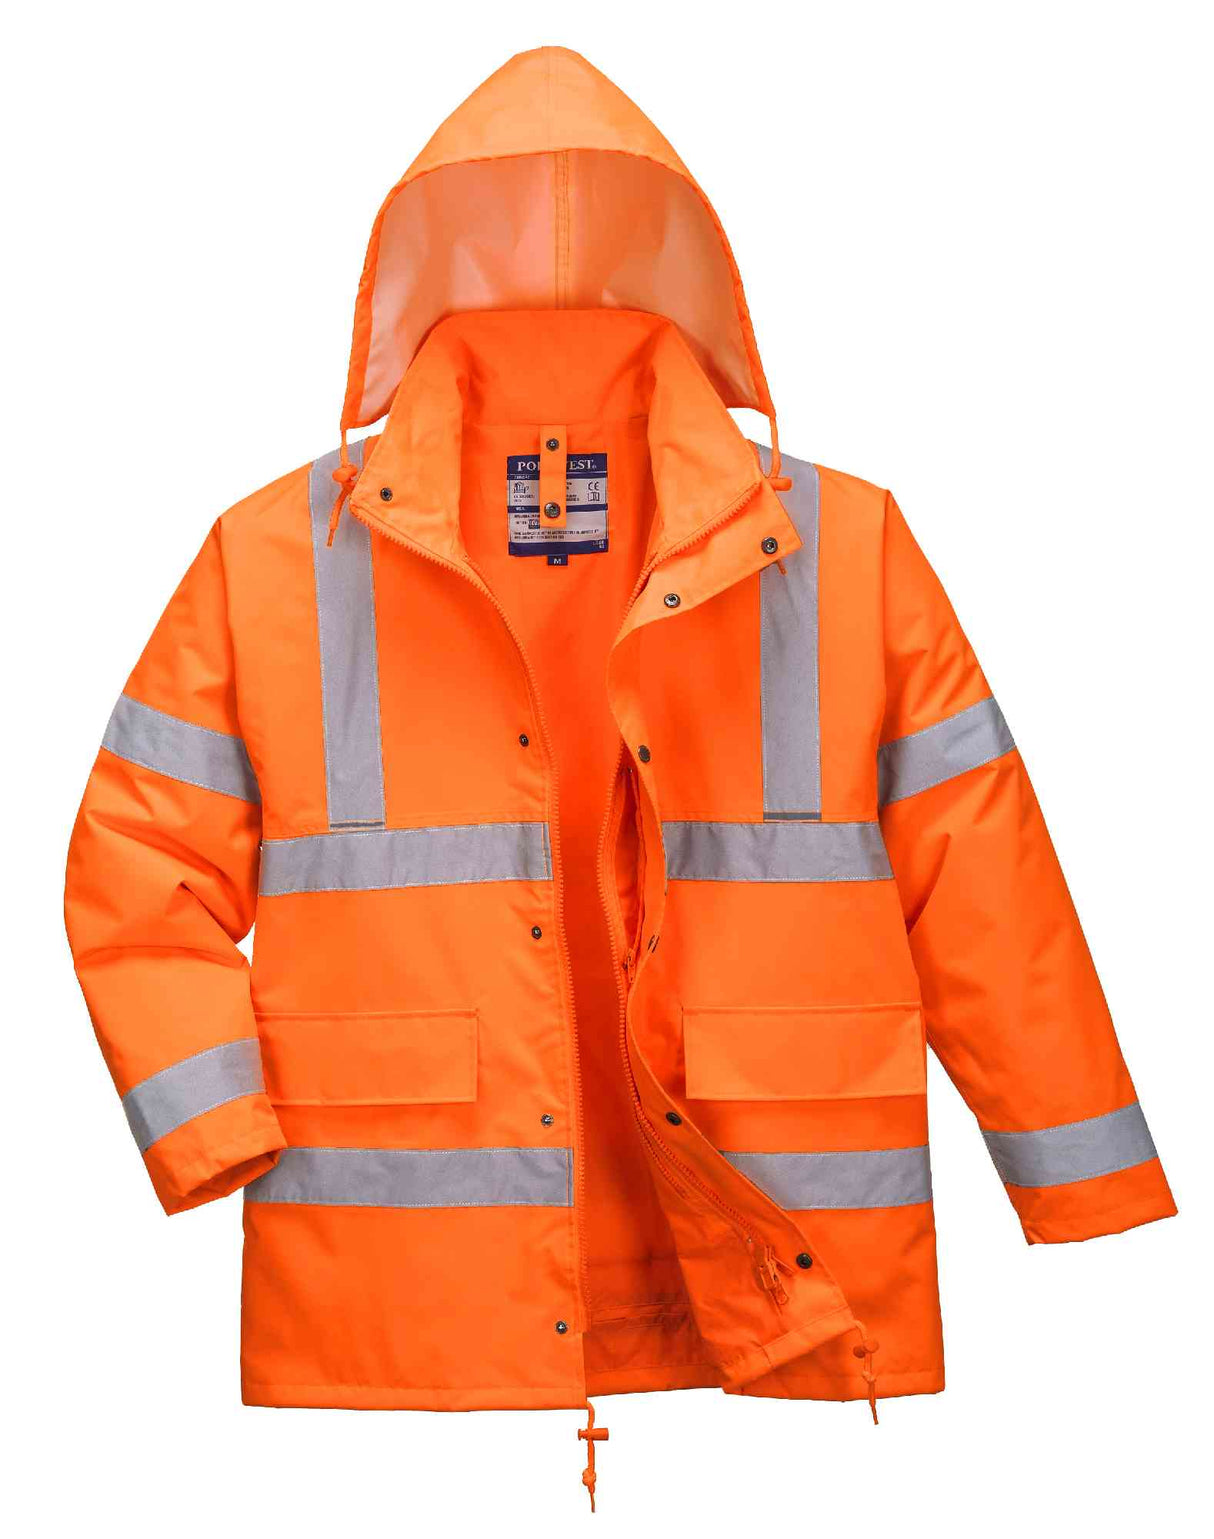 Portwest S468 Hi Vis 4-in-1 Waterproof Traffic Jacket & Bodywarmer Orange